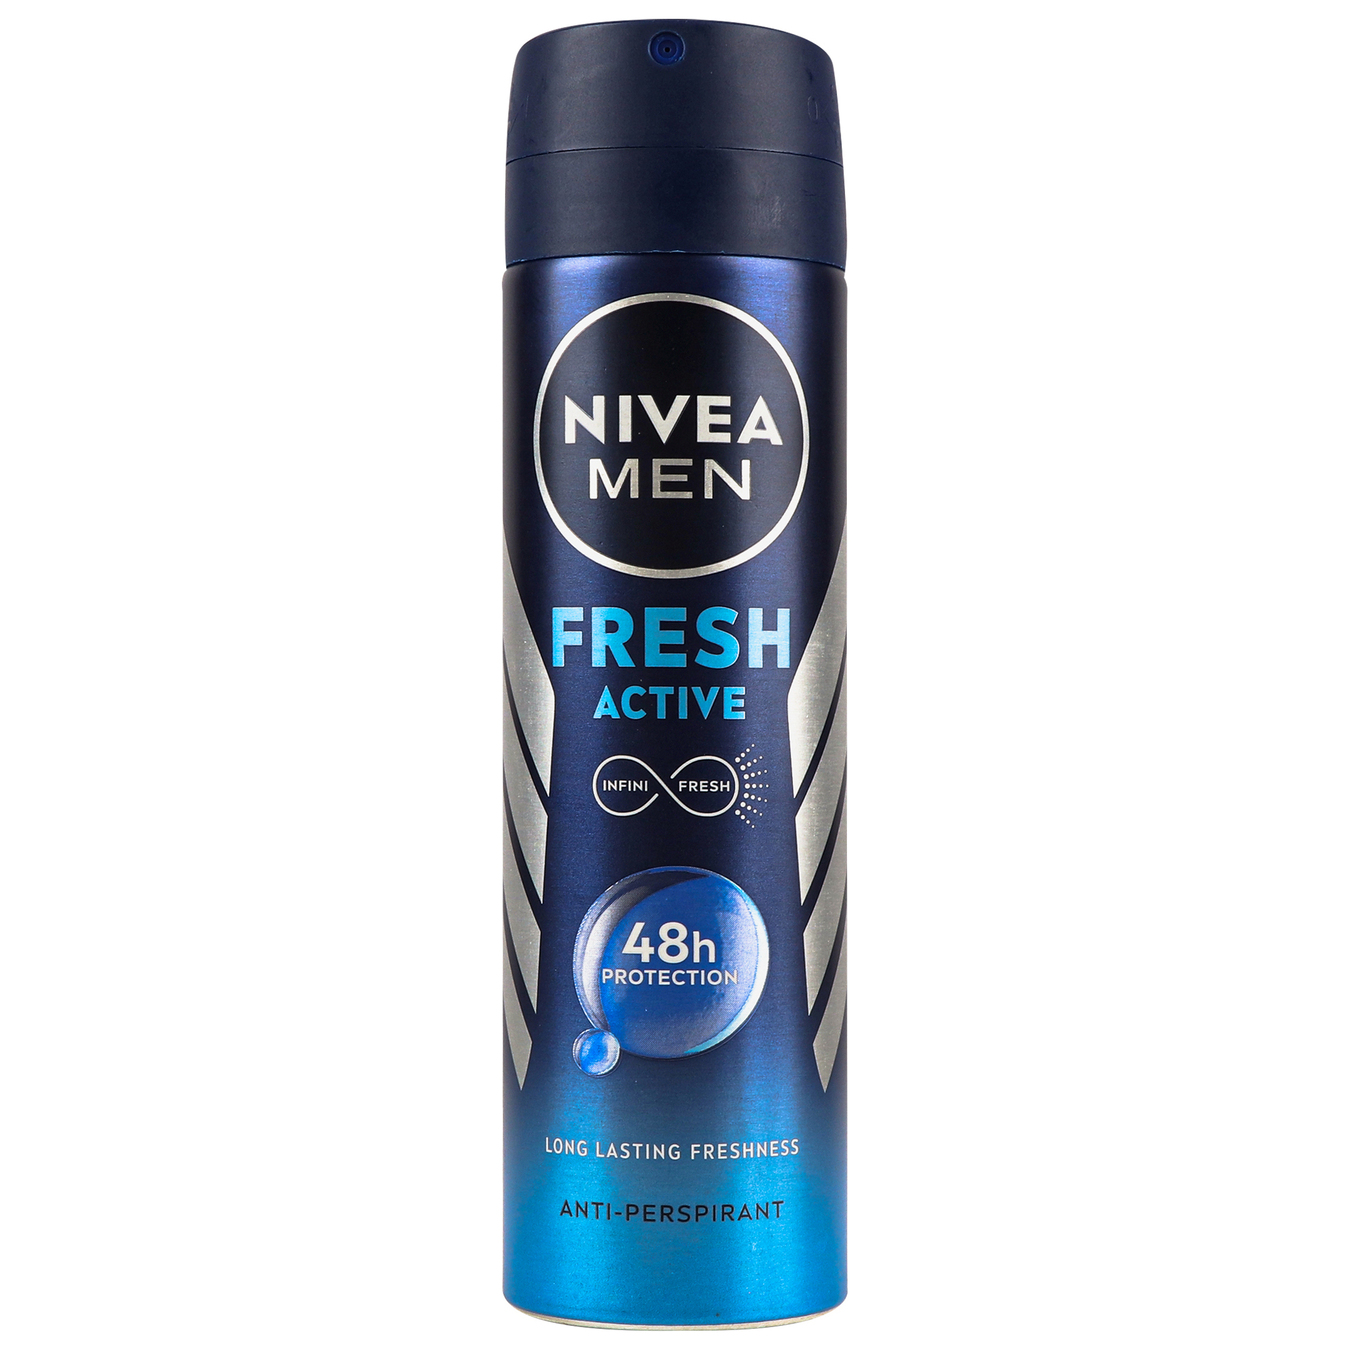 Antiperspirant Nivea Men Fresh Active men's spray 150ml